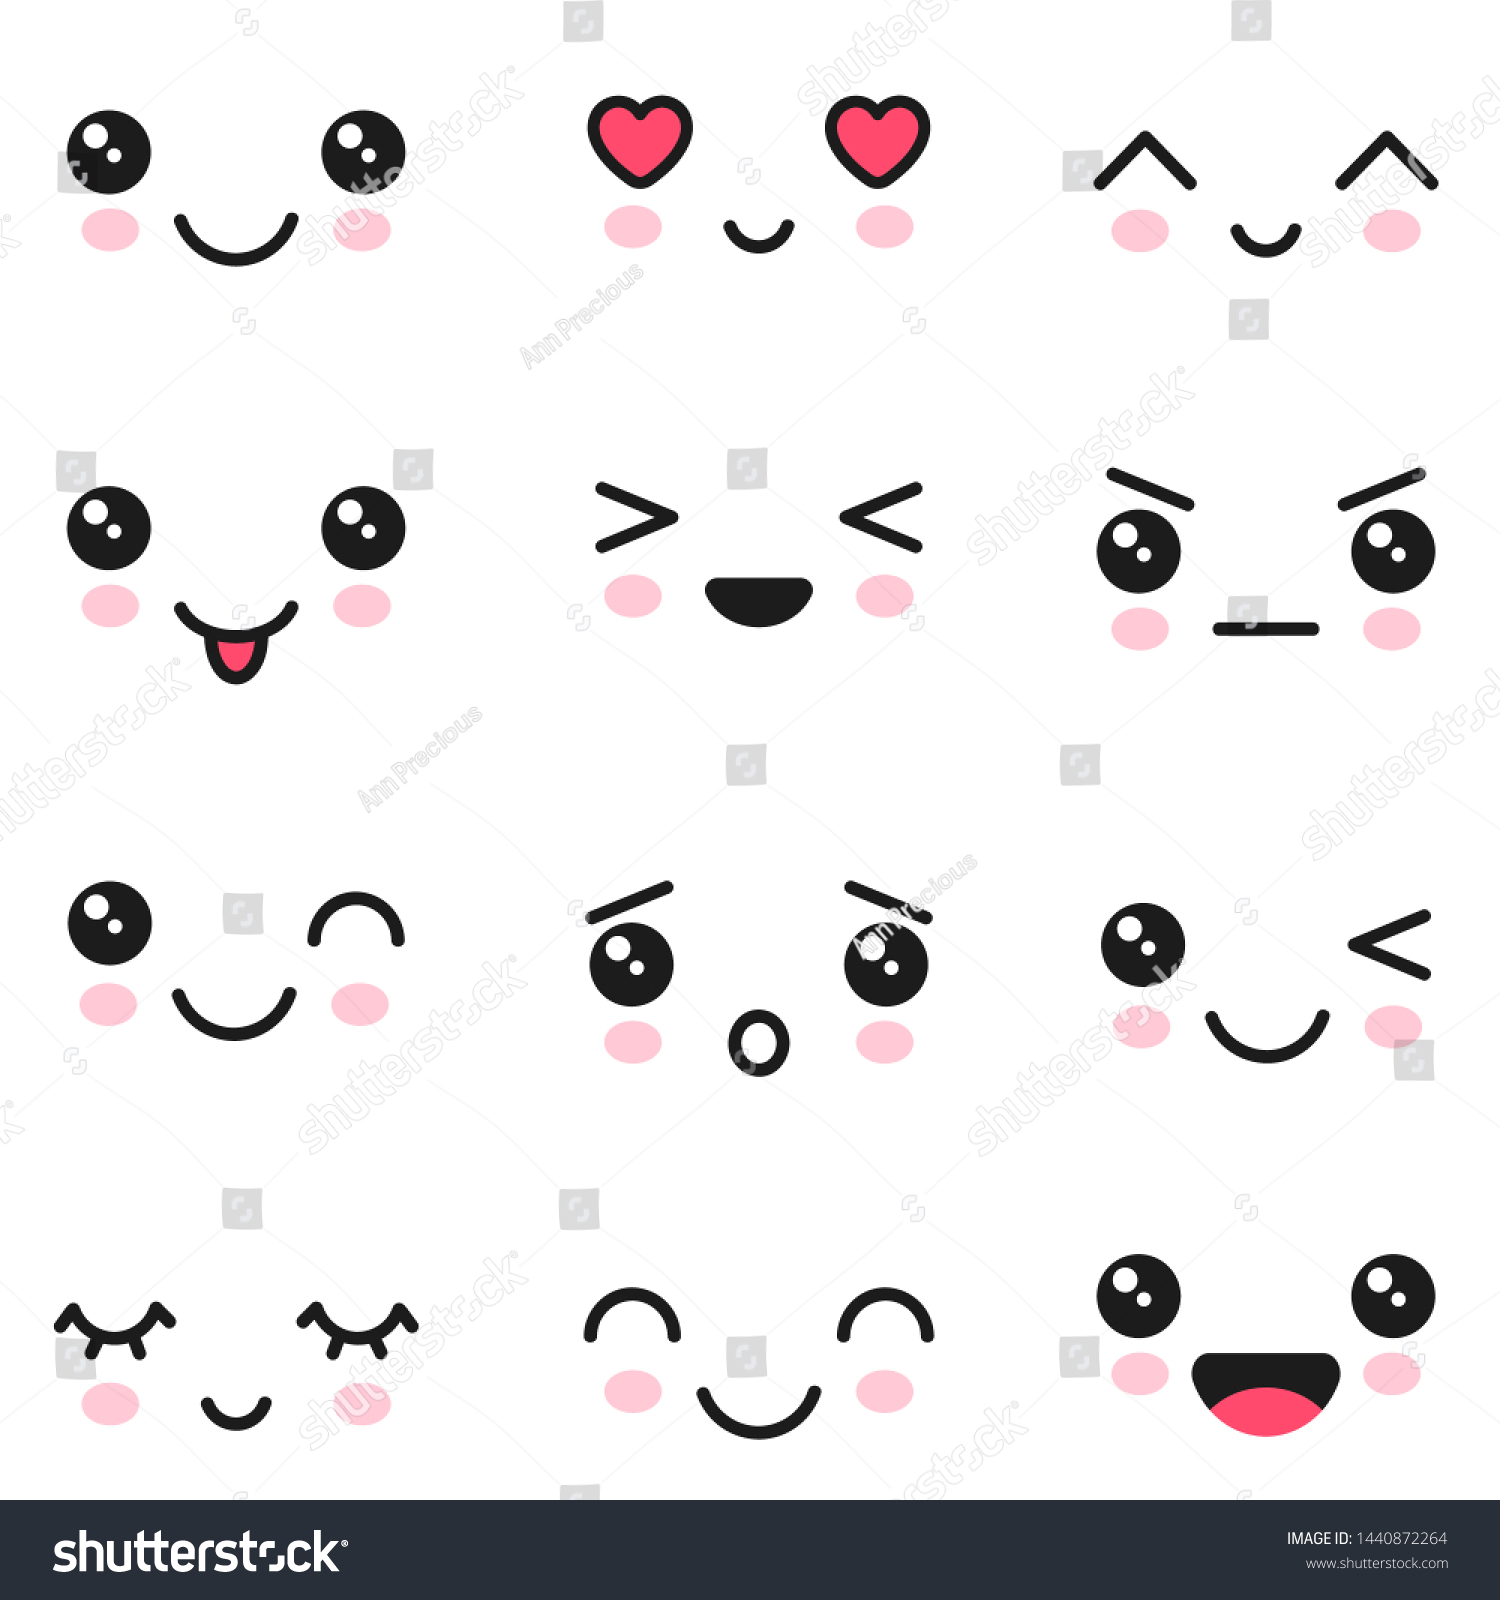 Kawaii Emotions Adorable Characters Icons Design Stock Vector Royalty Free